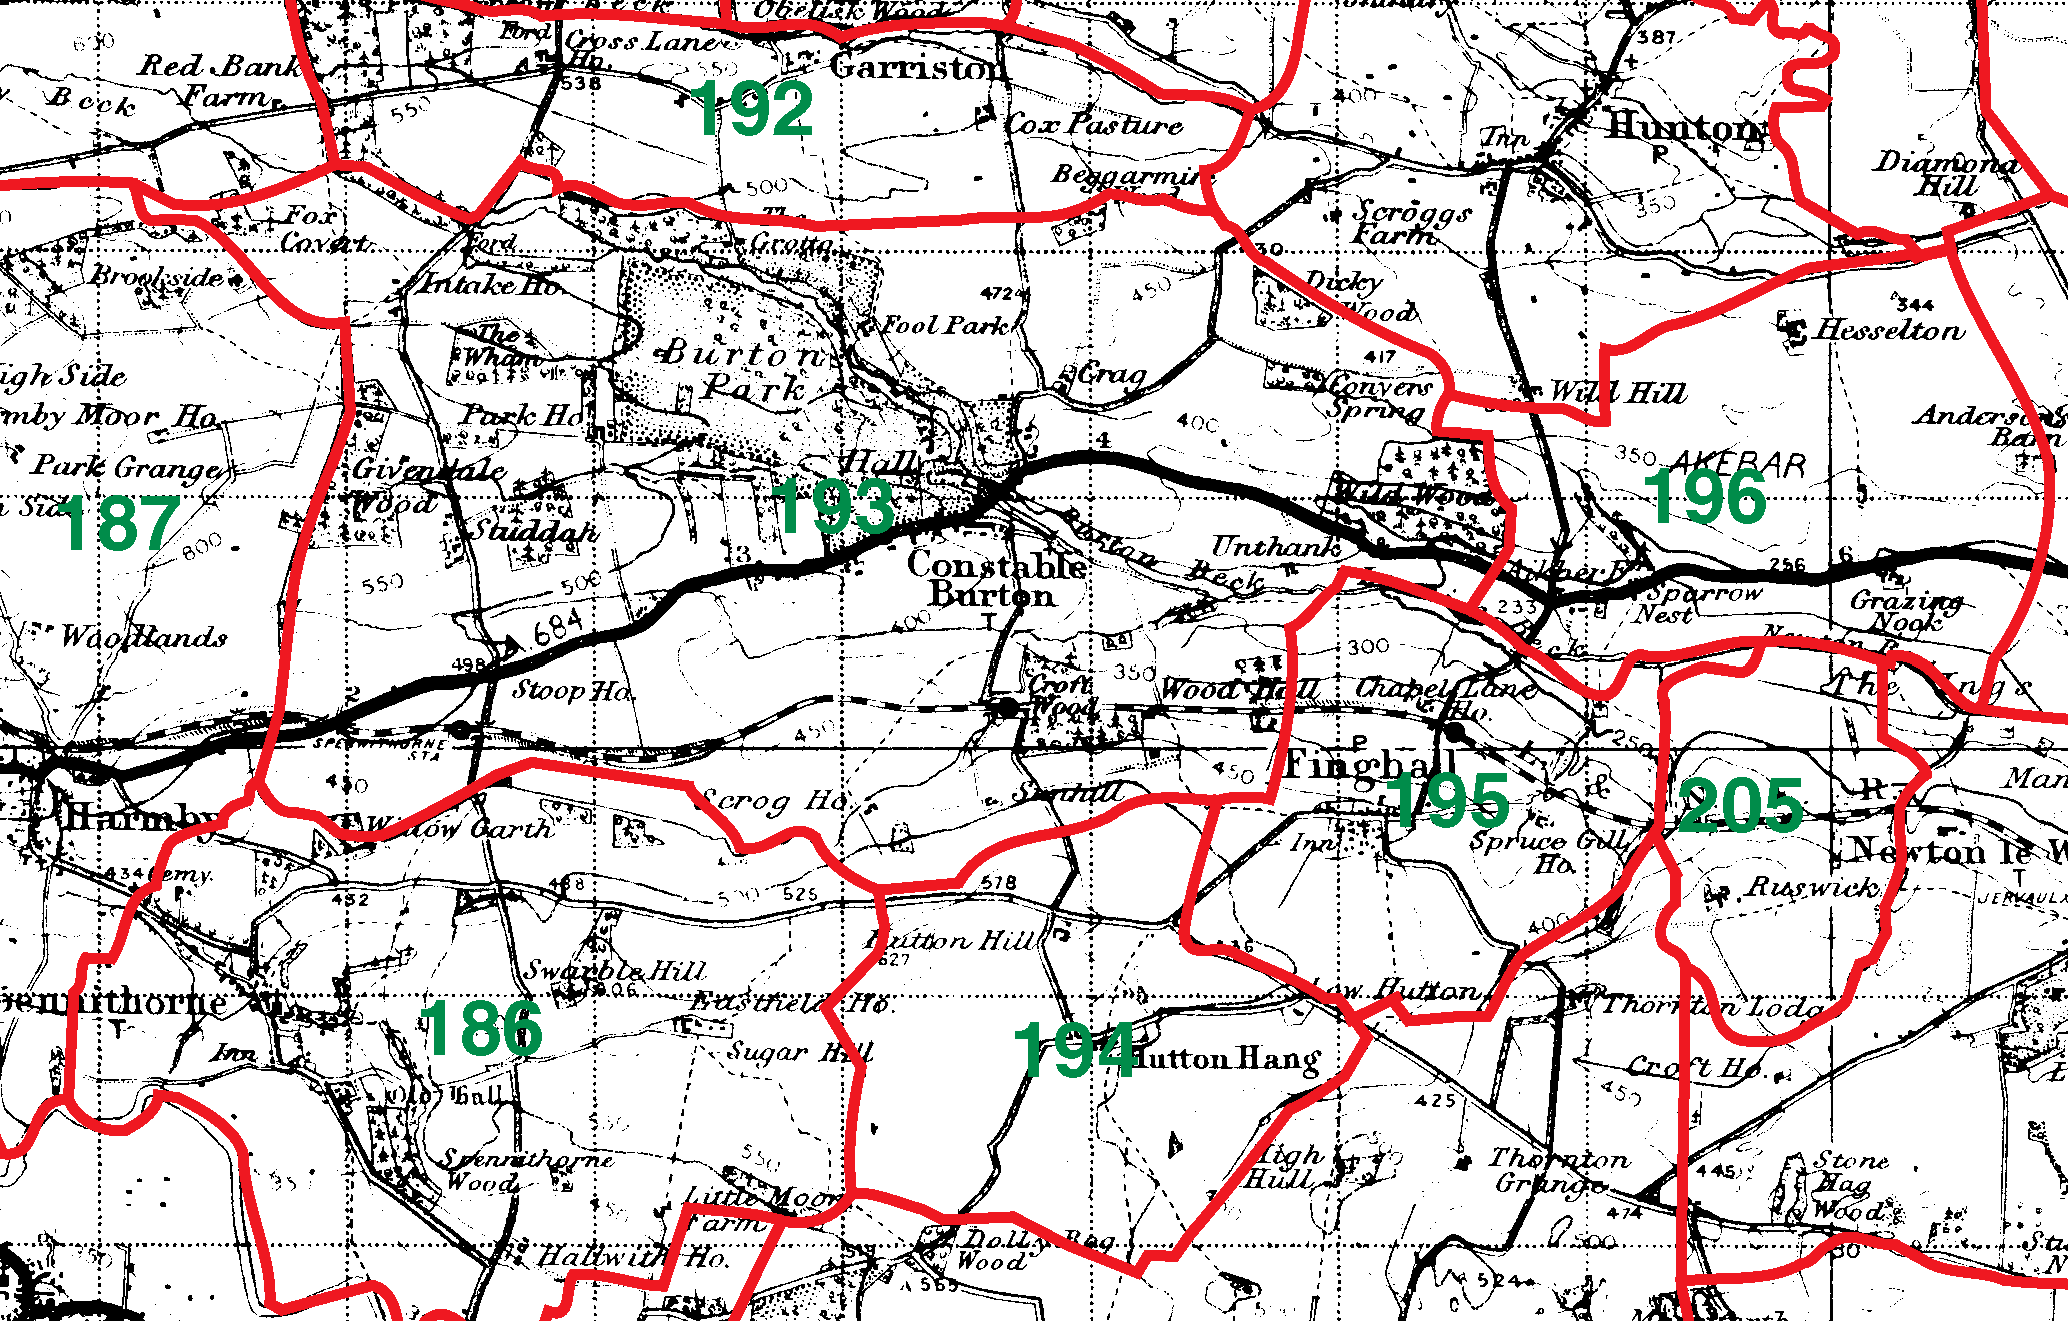 Finghall boundaries map